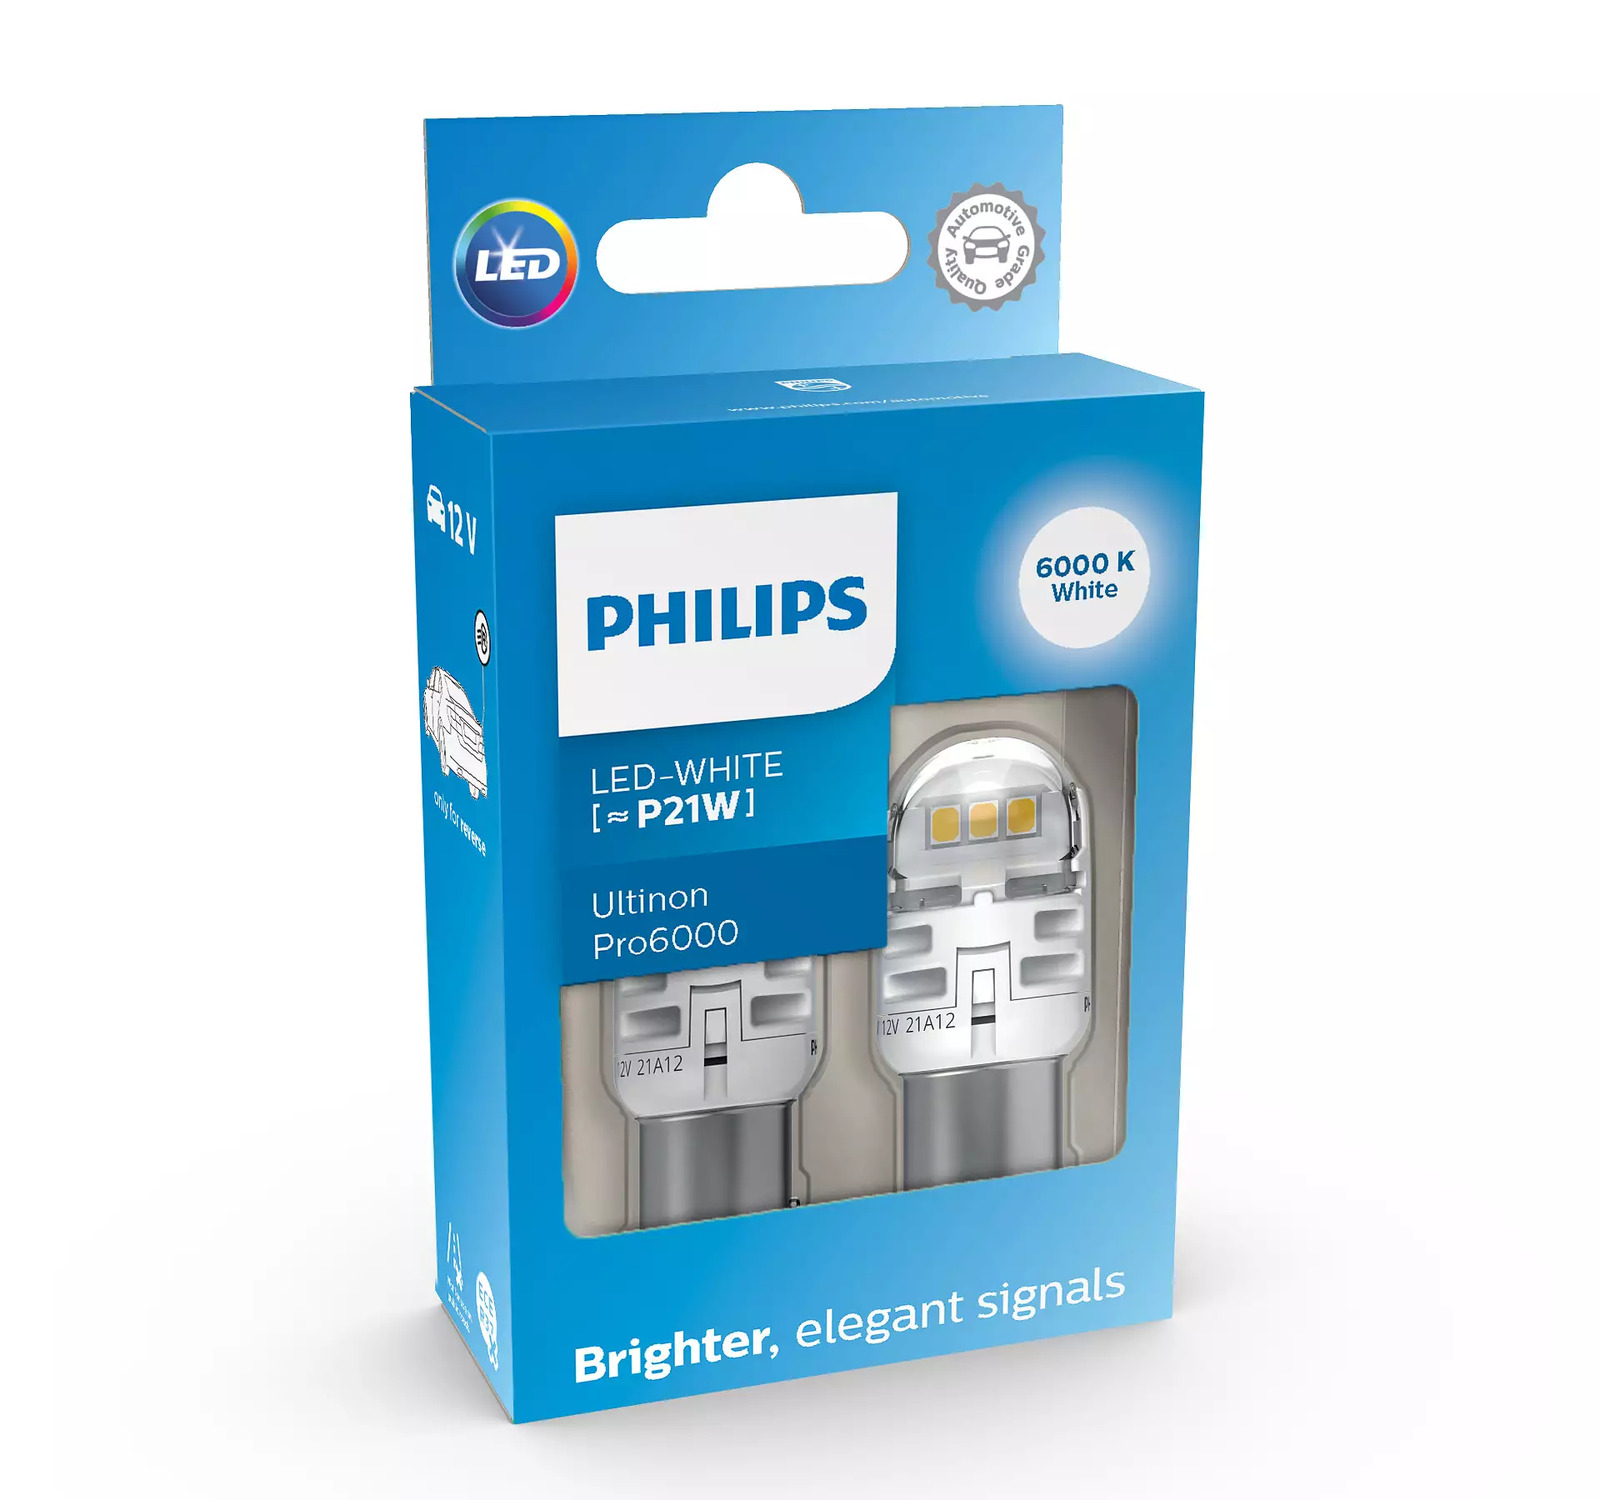 PHILIPS Pro6000 P21W BA15s 1156 Ultinon LED White Light Bulbs